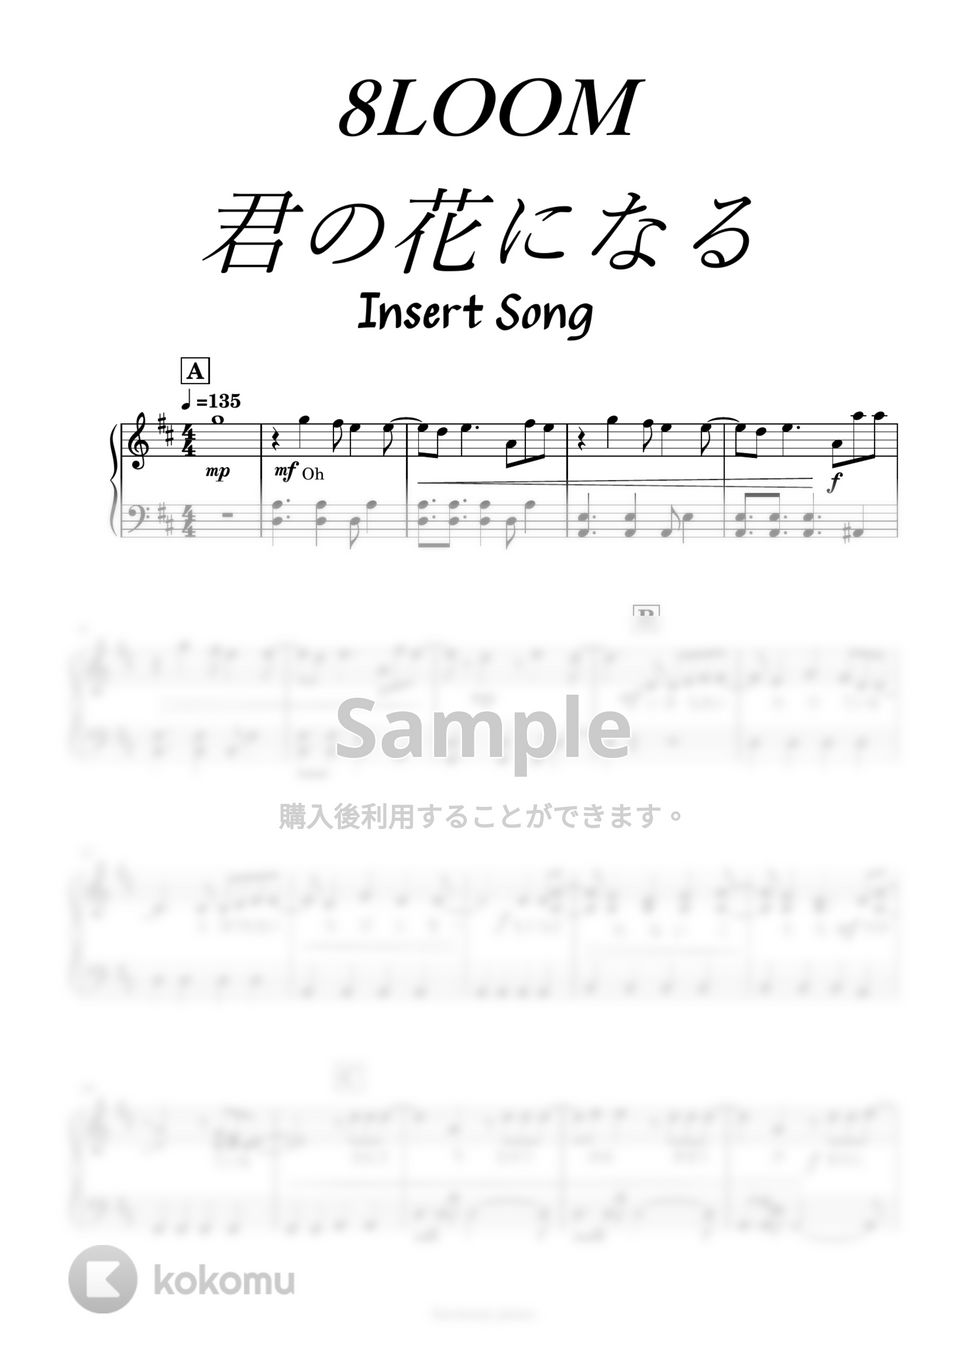 8LOOM - 君の花になる (歌詞付) by harmony piano